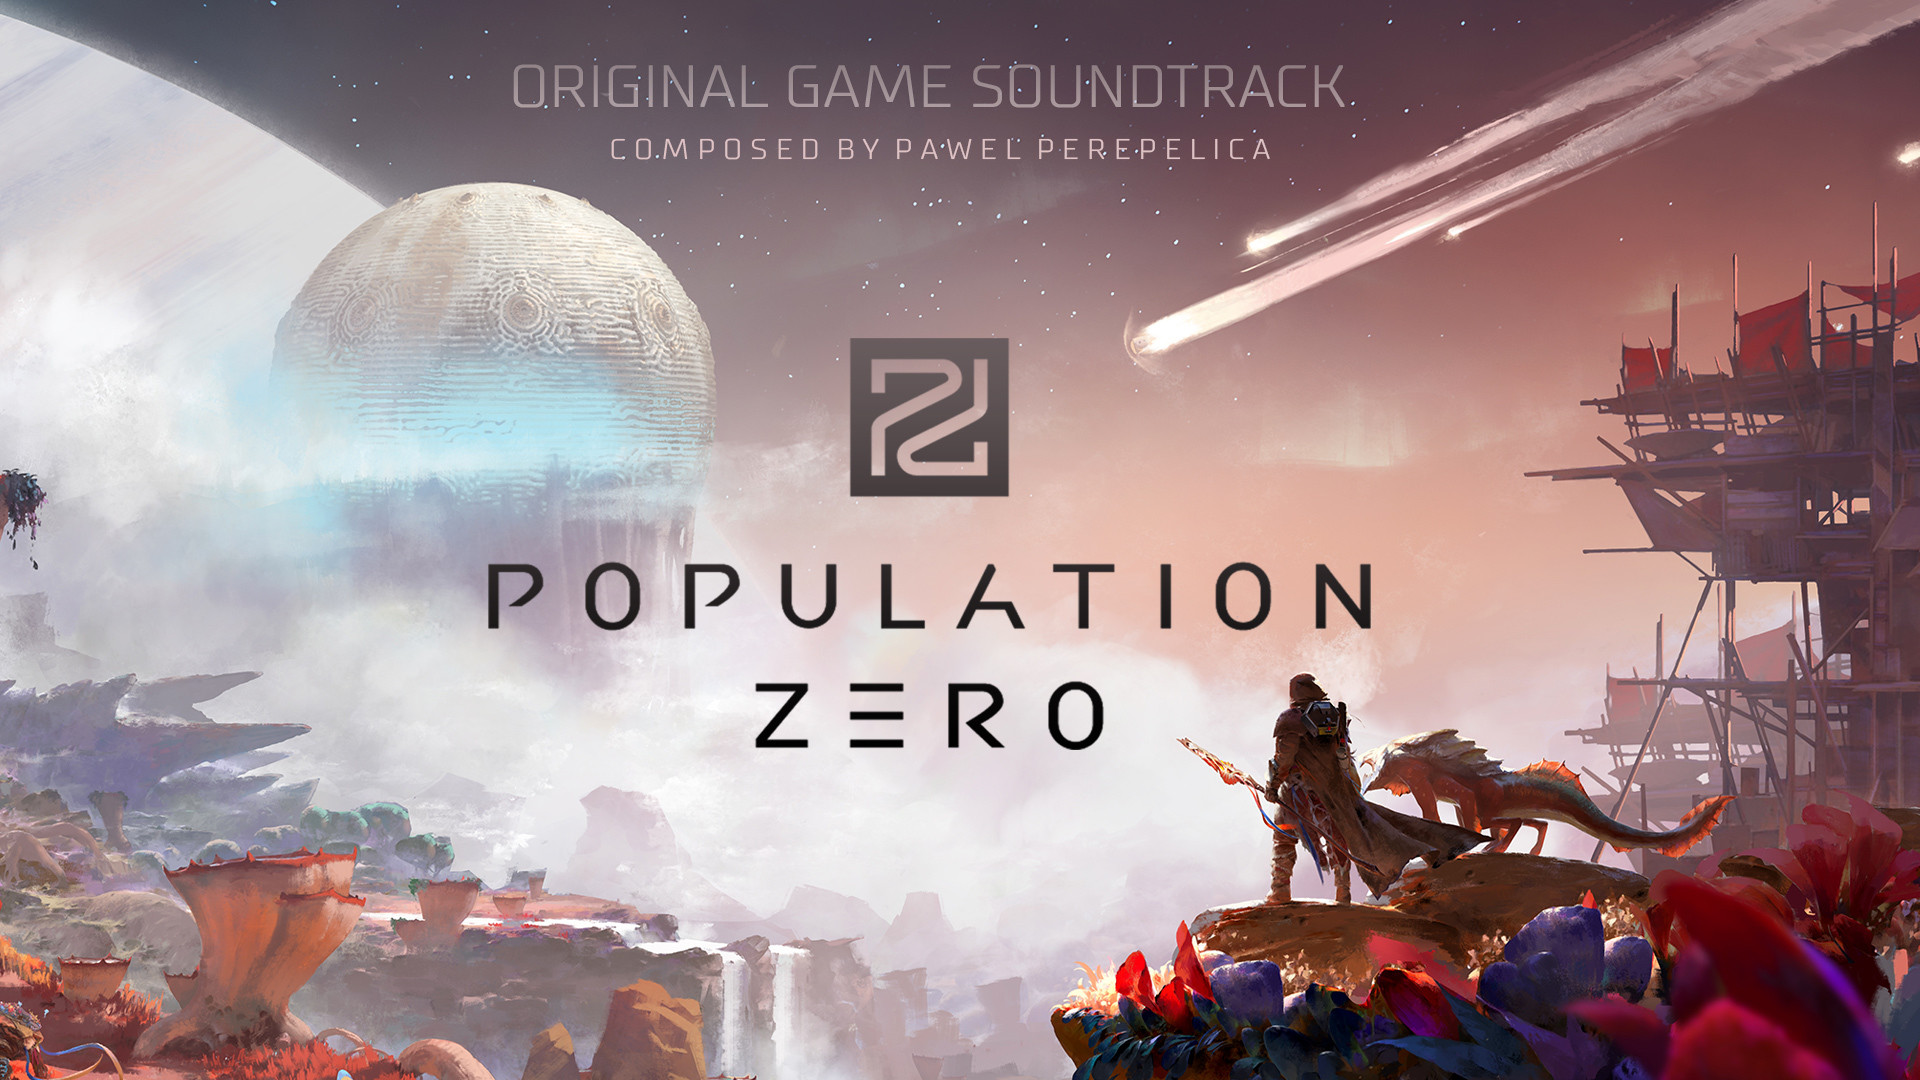 Population Zero Soundtrack Featured Screenshot #1